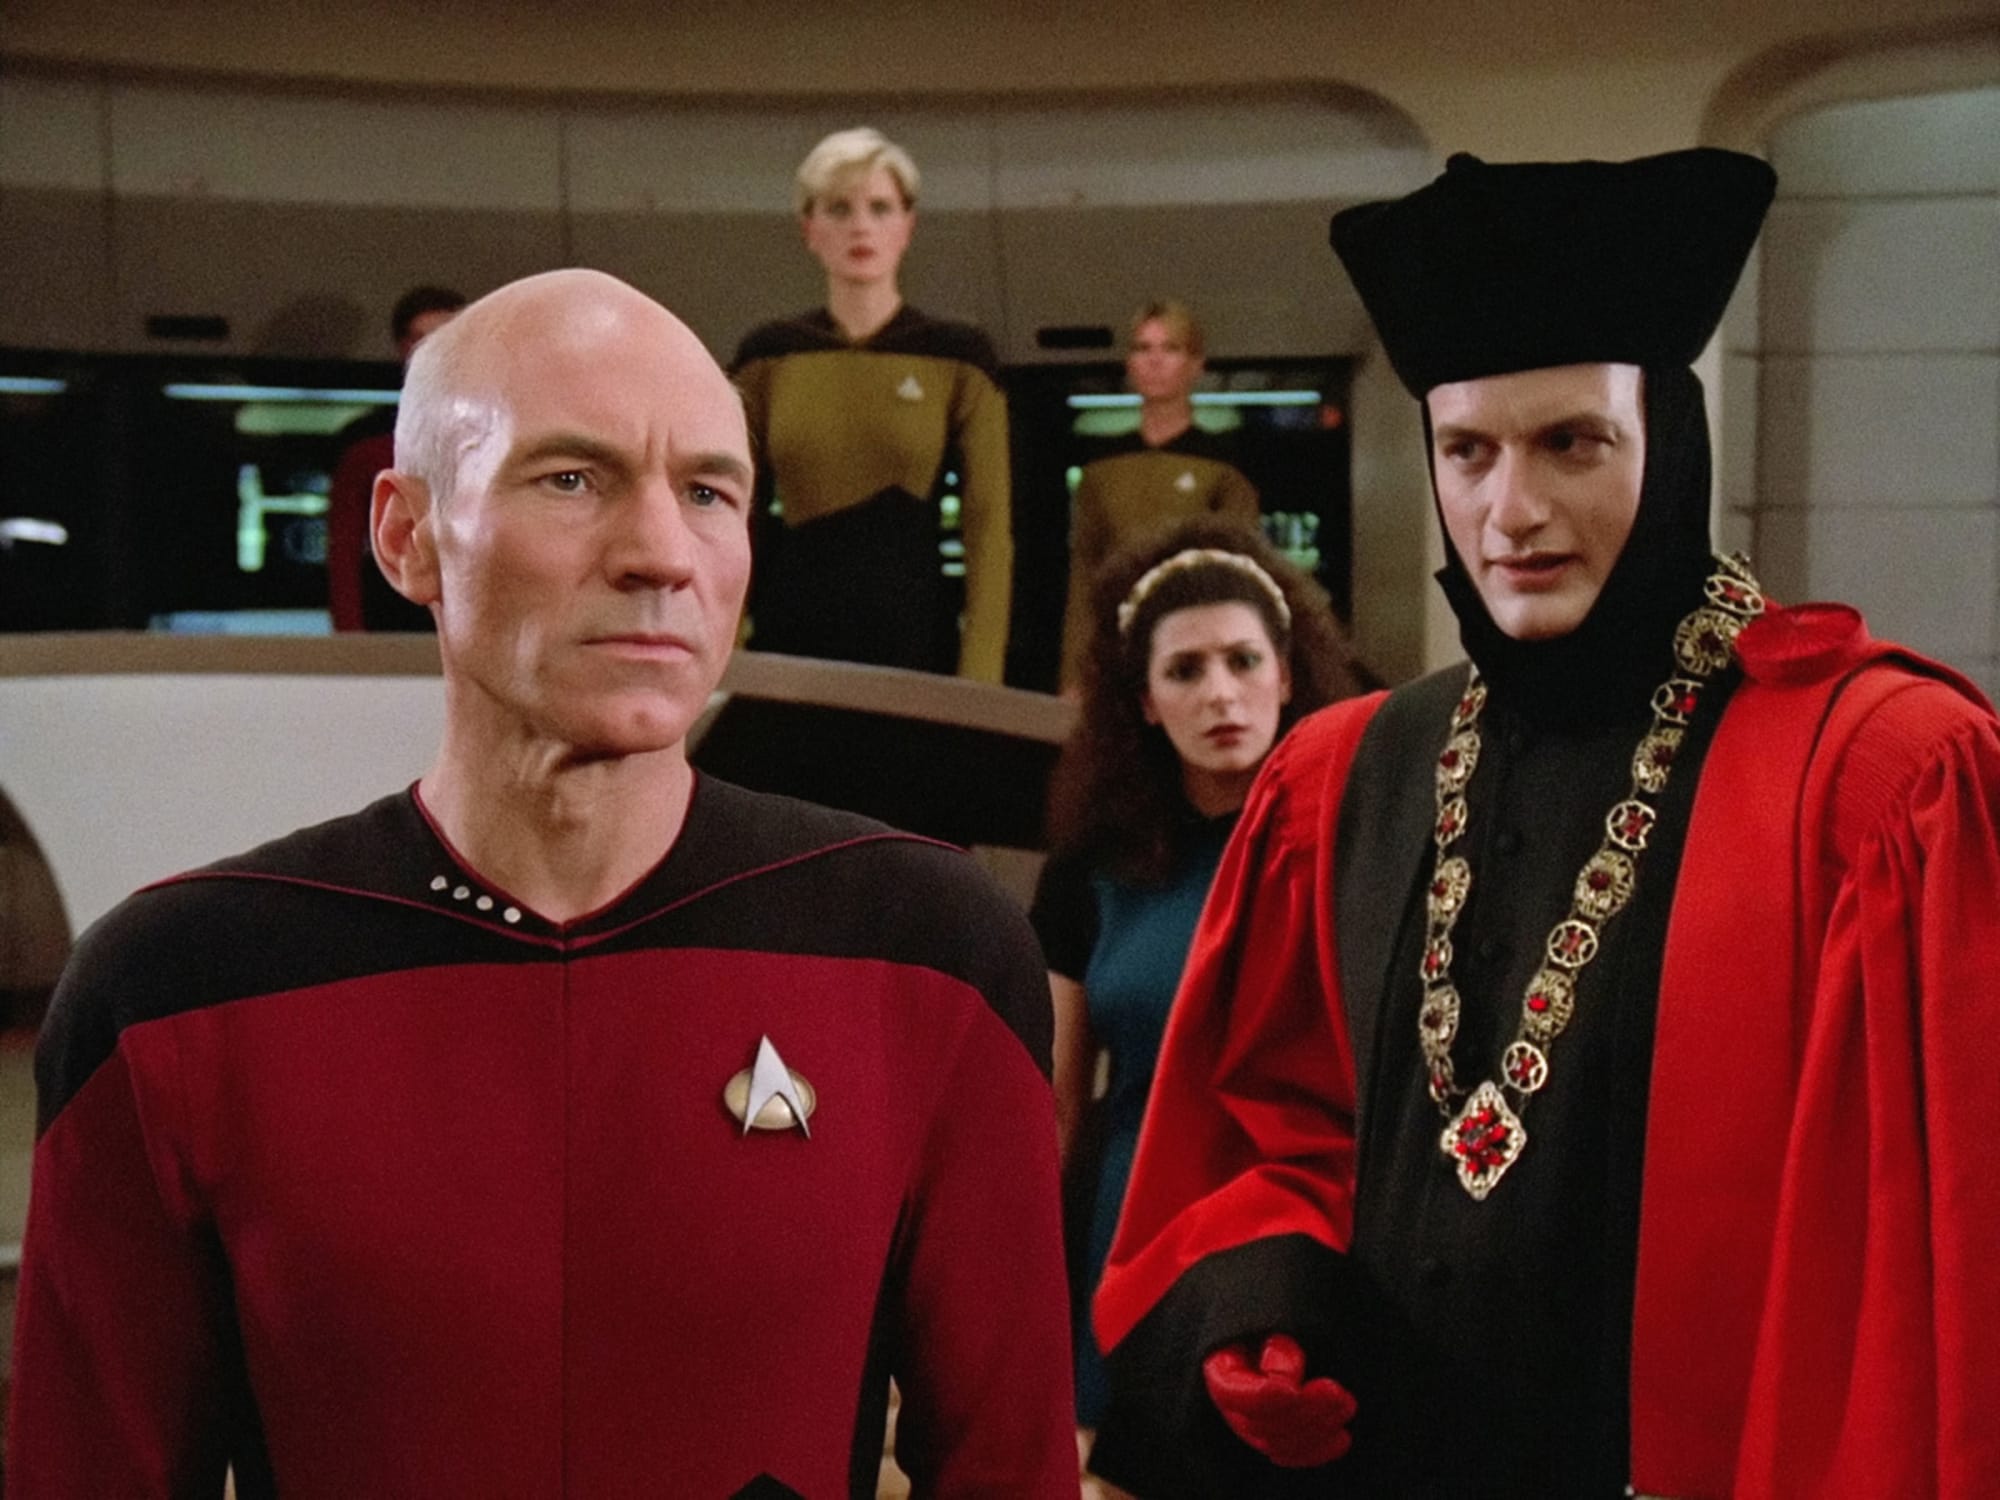 Star Trek: Lower Decks to bring back John de Lancie as Q